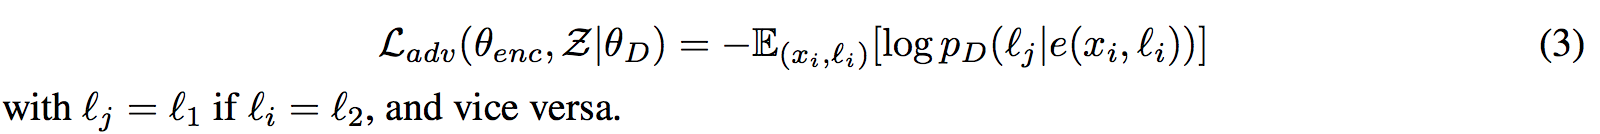 Equation 3-2